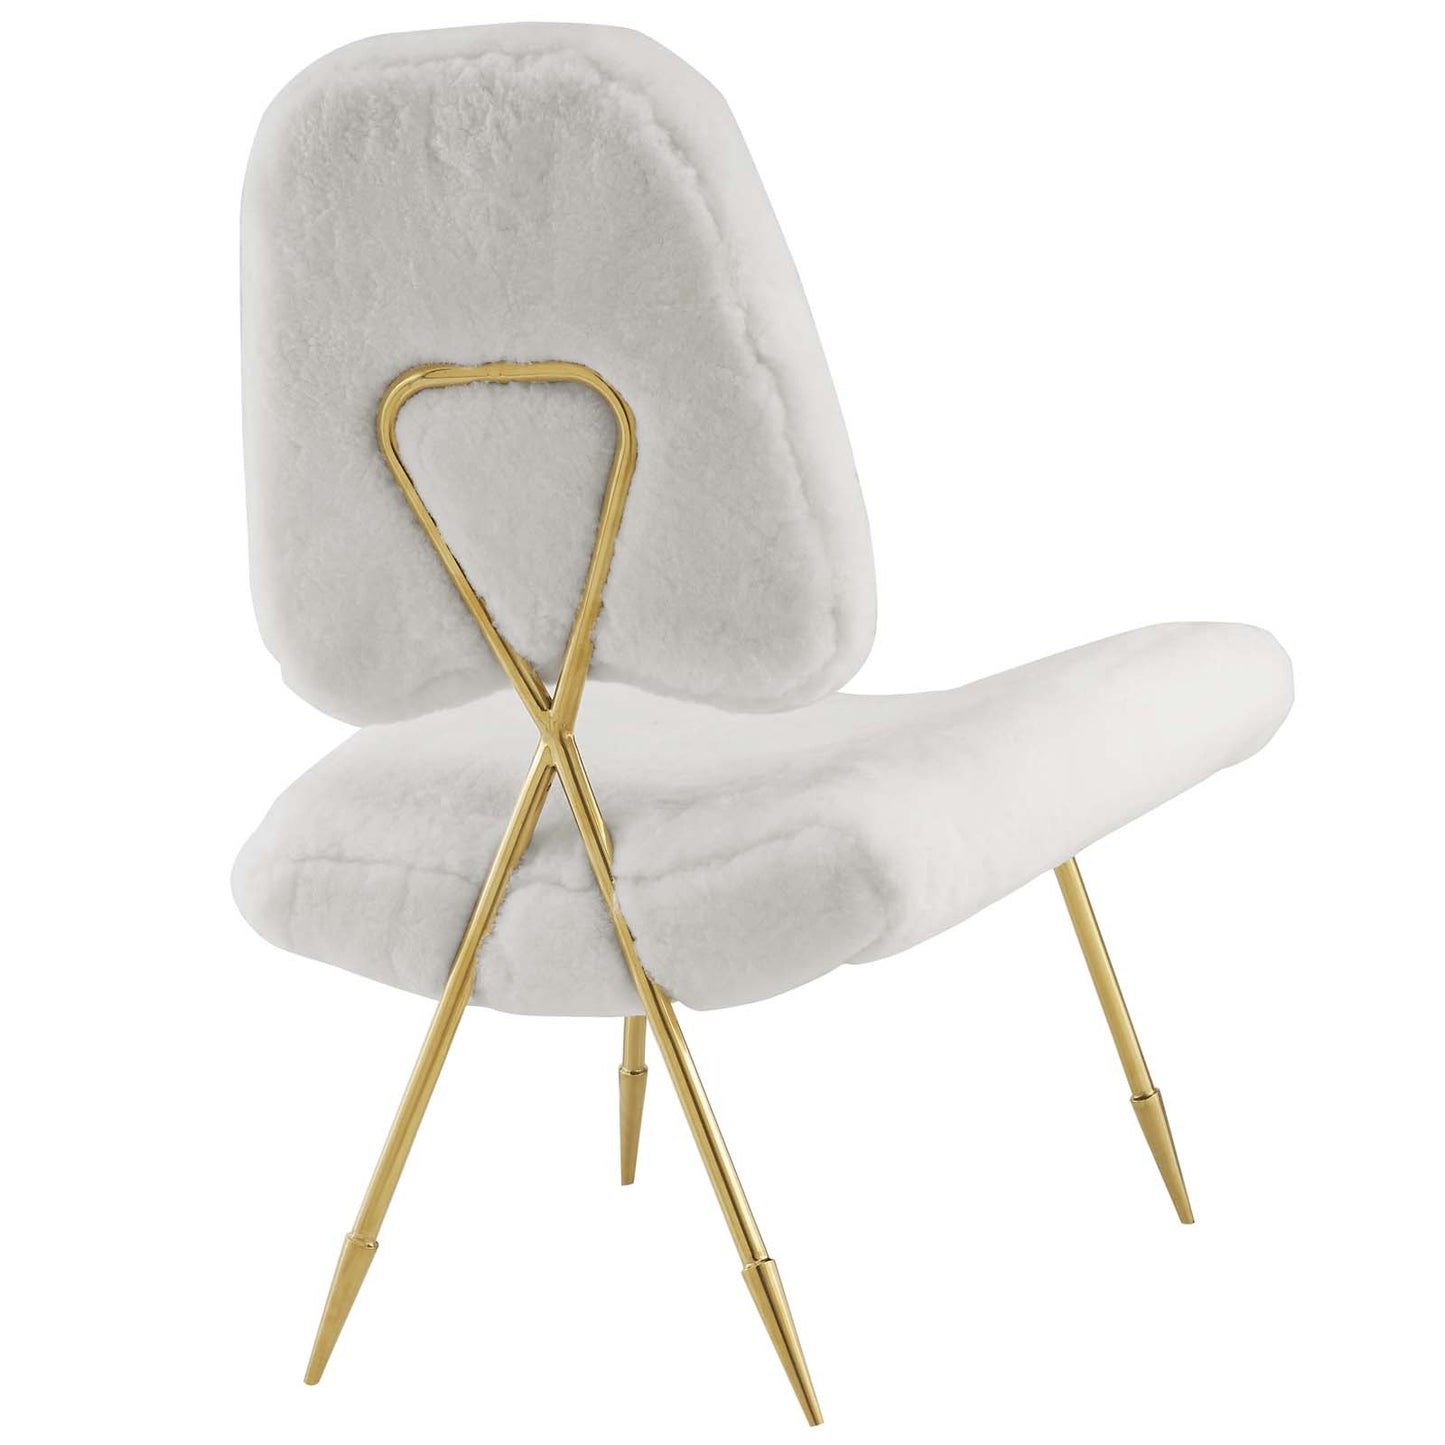 Ponder Upholstered Sheepskin Fur Lounge Chair in White